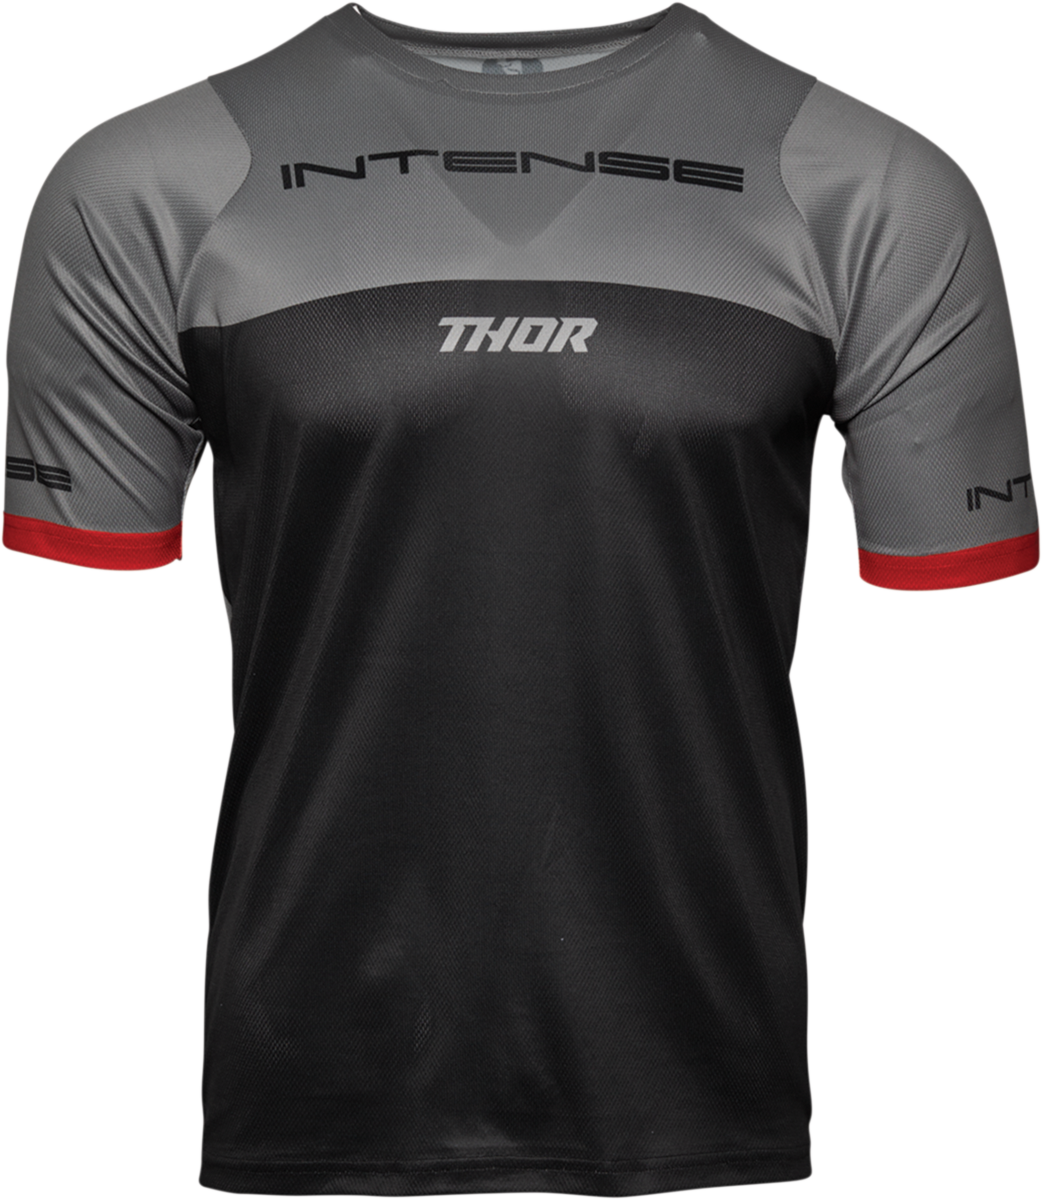 THOR Intense Team Jersey - Short-Sleeve - Black/Gray - 2XL 5120-0061